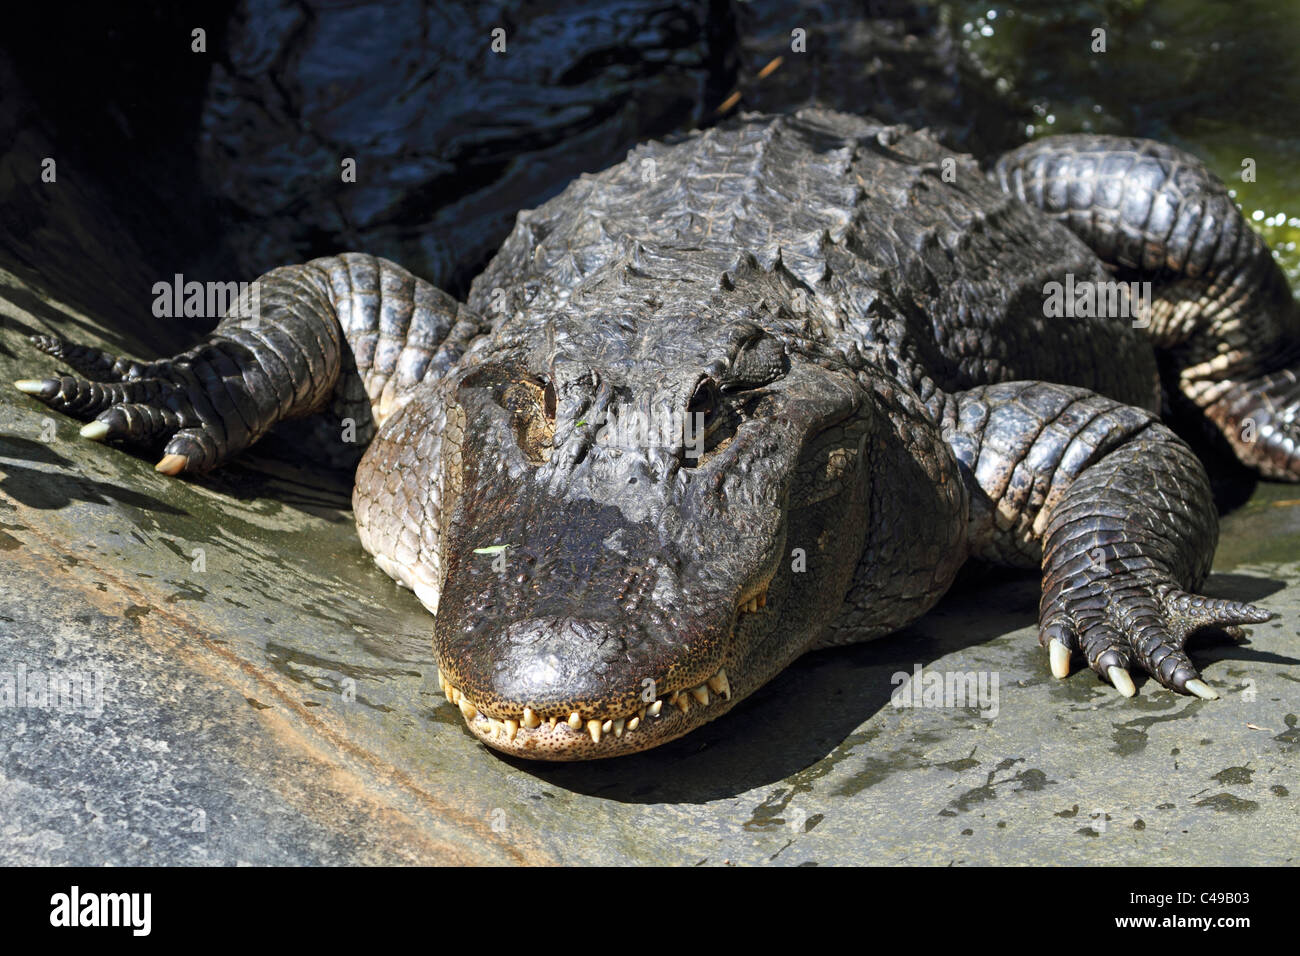 Un American Alligator Alligator mississippiensis. Cape May County Zoo, Cape May Courthouse, New Jersey, STATI UNITI D'AMERICA Foto Stock